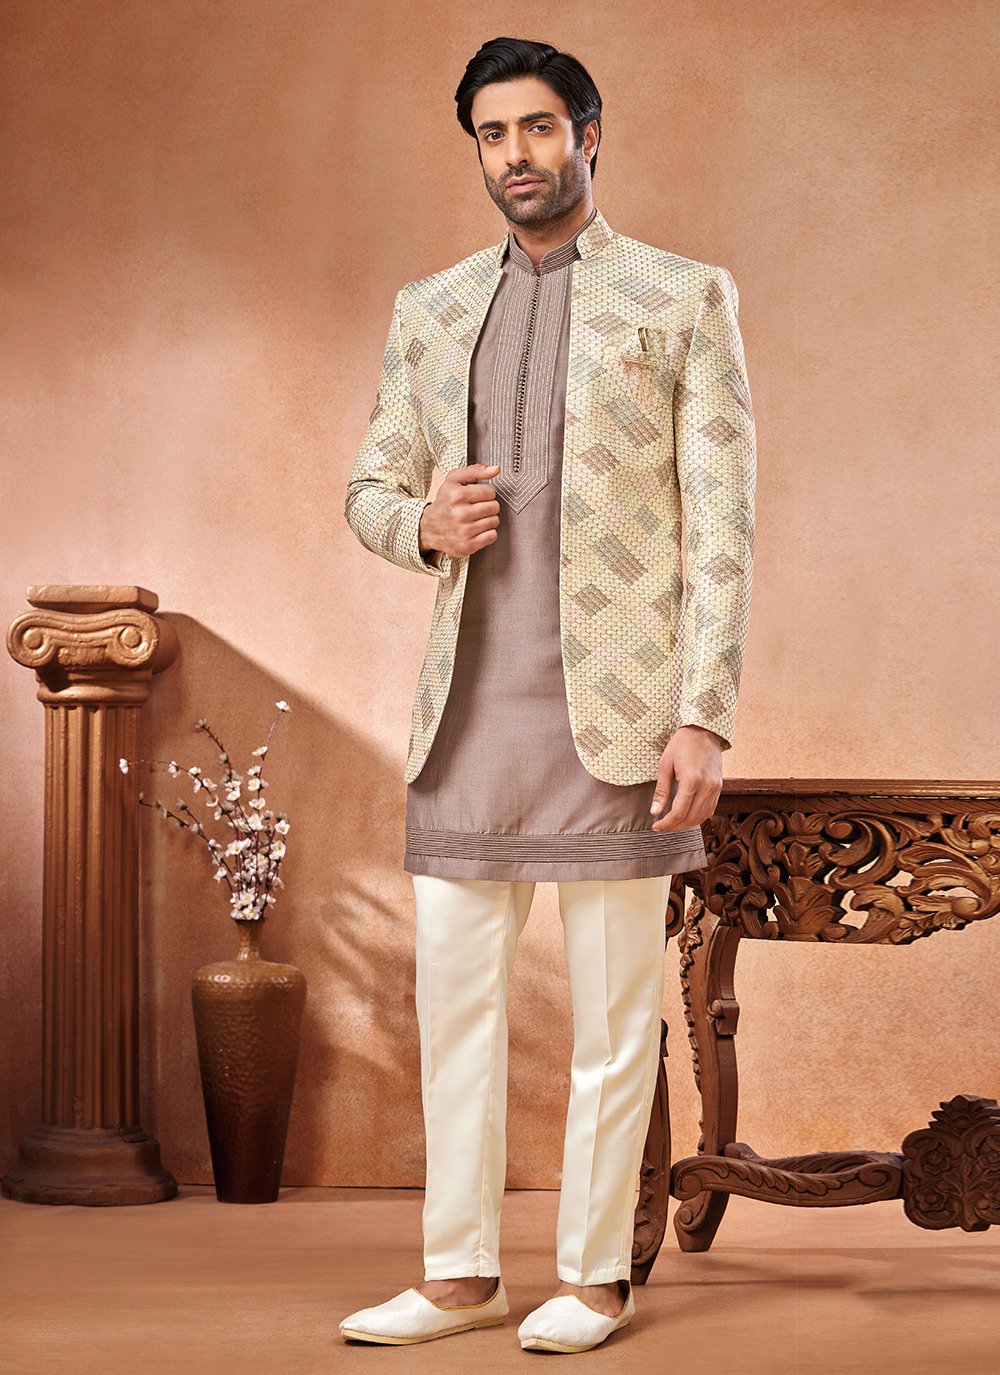 Cream Color Jodhpuri Suit | Jodhpuri suits for men, Blazers for men, Suits